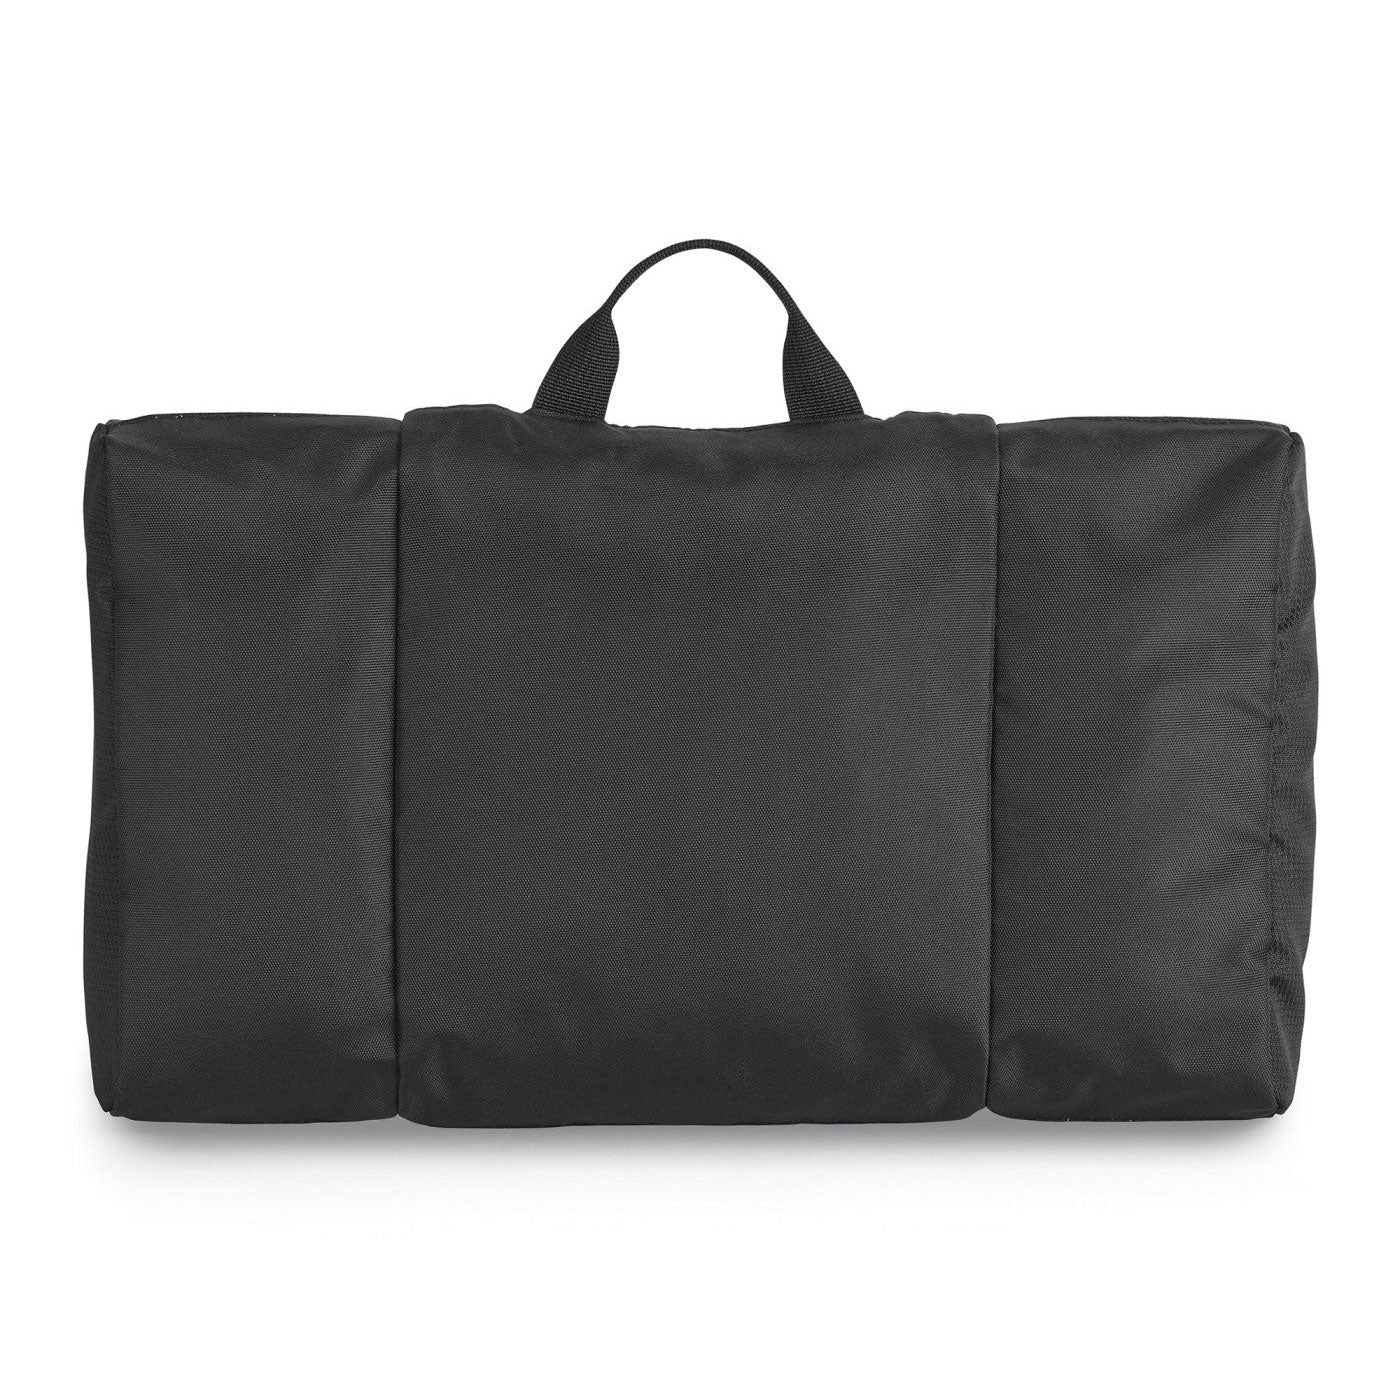 Samsonite Arden Customized Toiletry Bags, Black